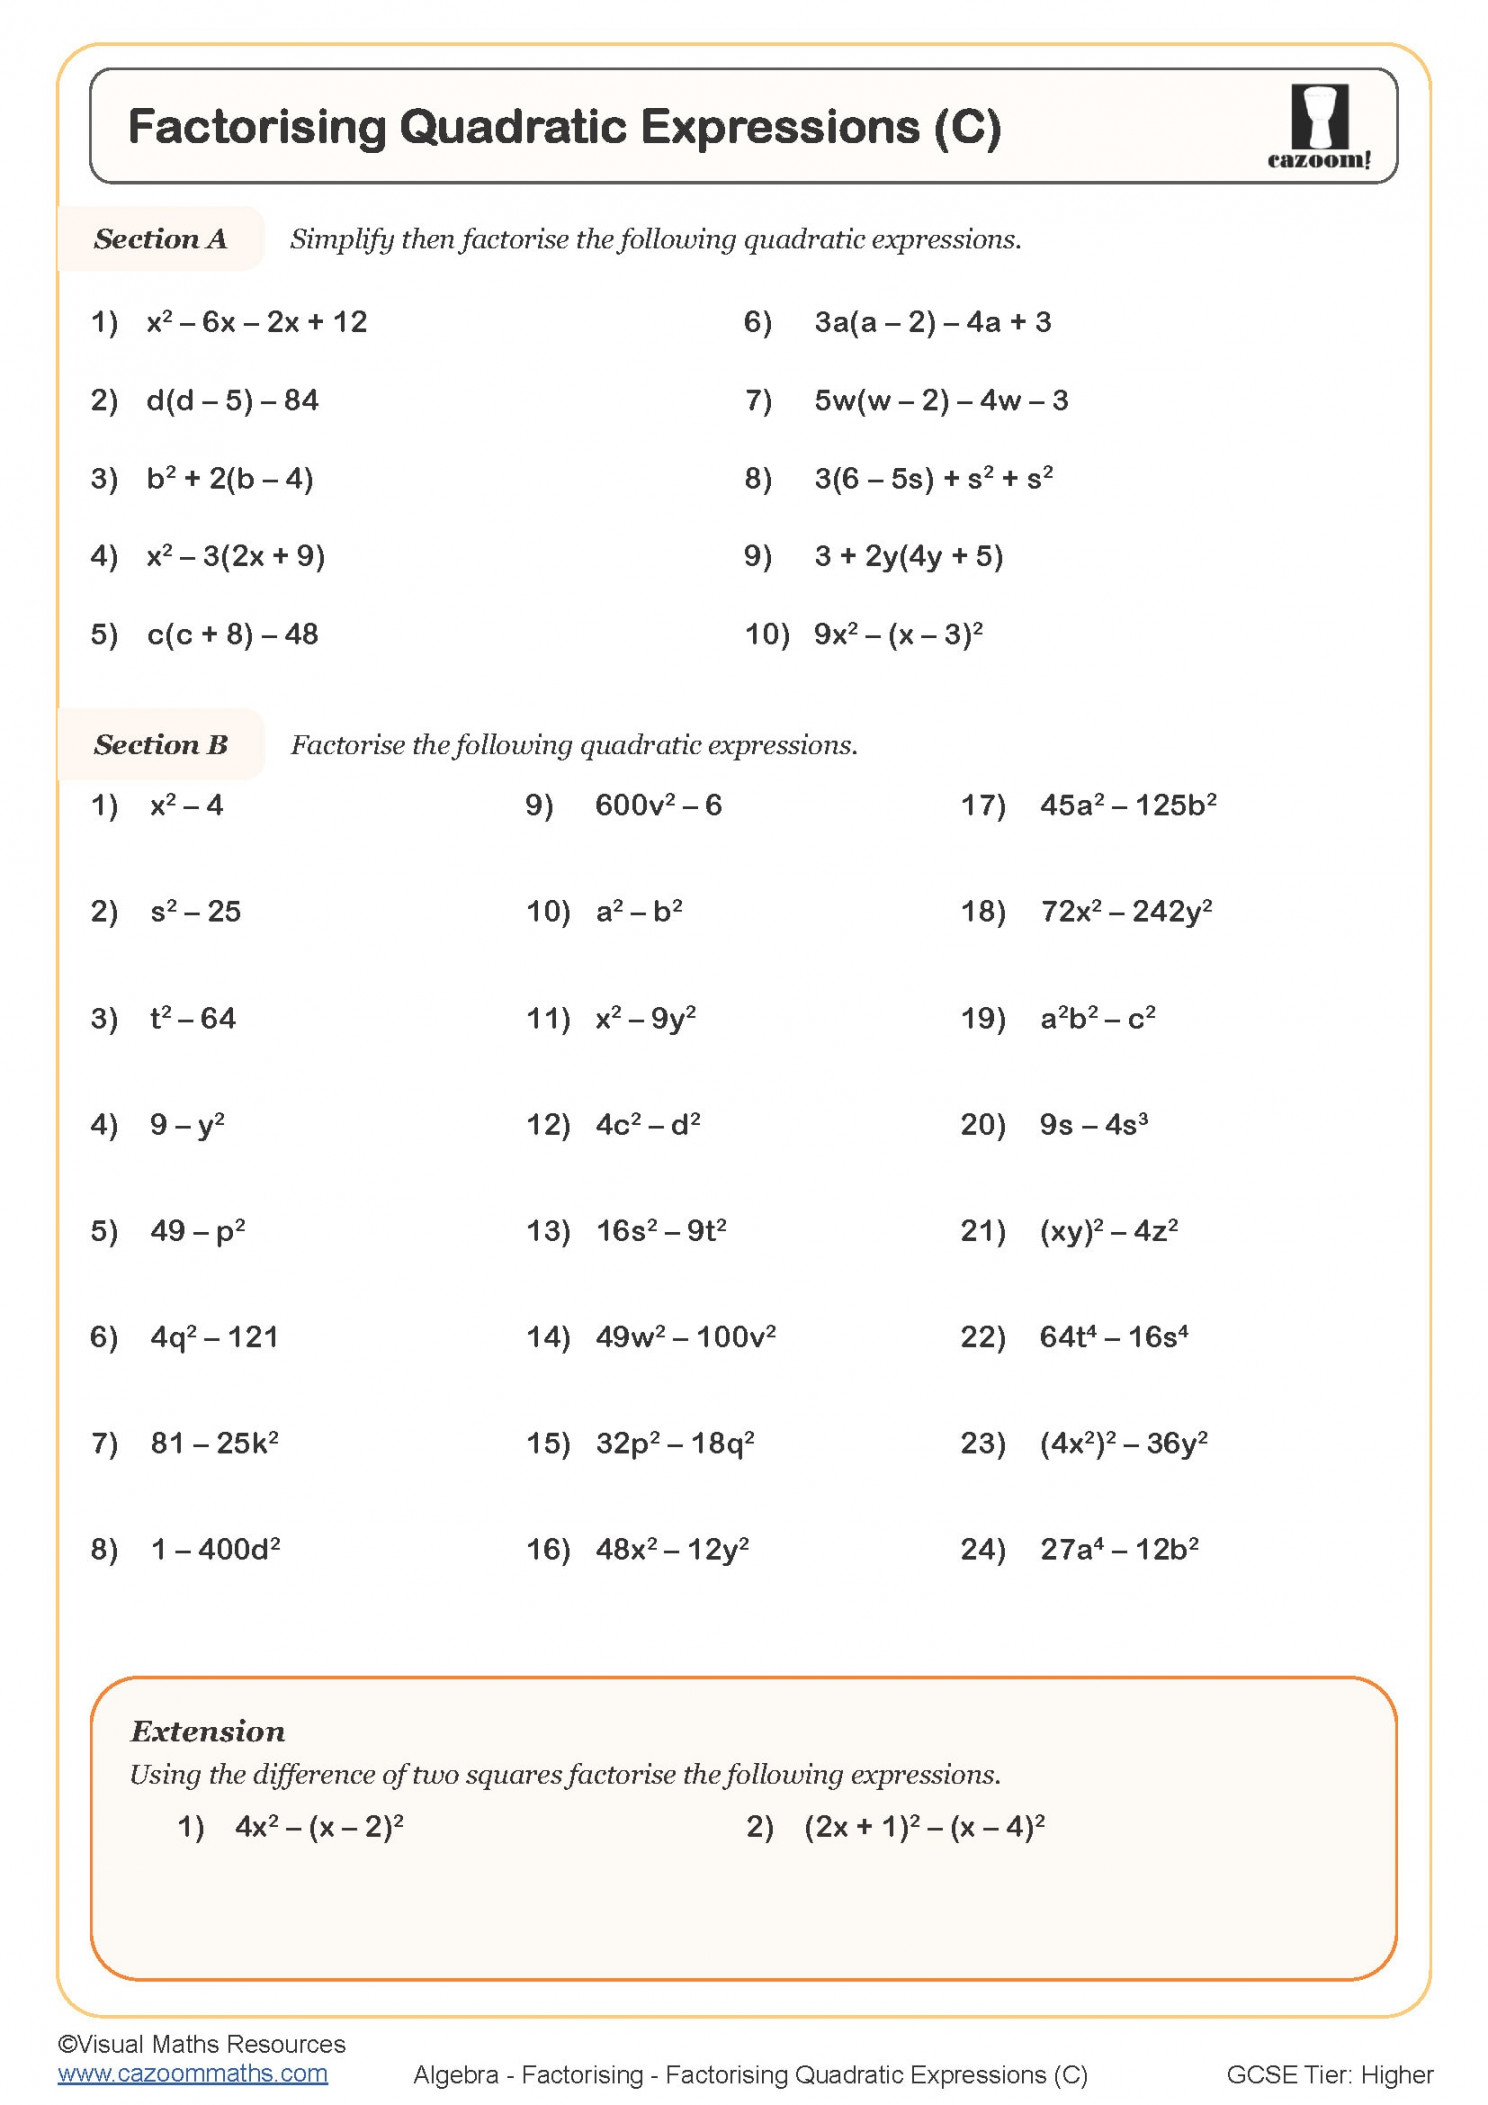 Factorising Quadratic Expressions (C) Worksheet  Printable PDF